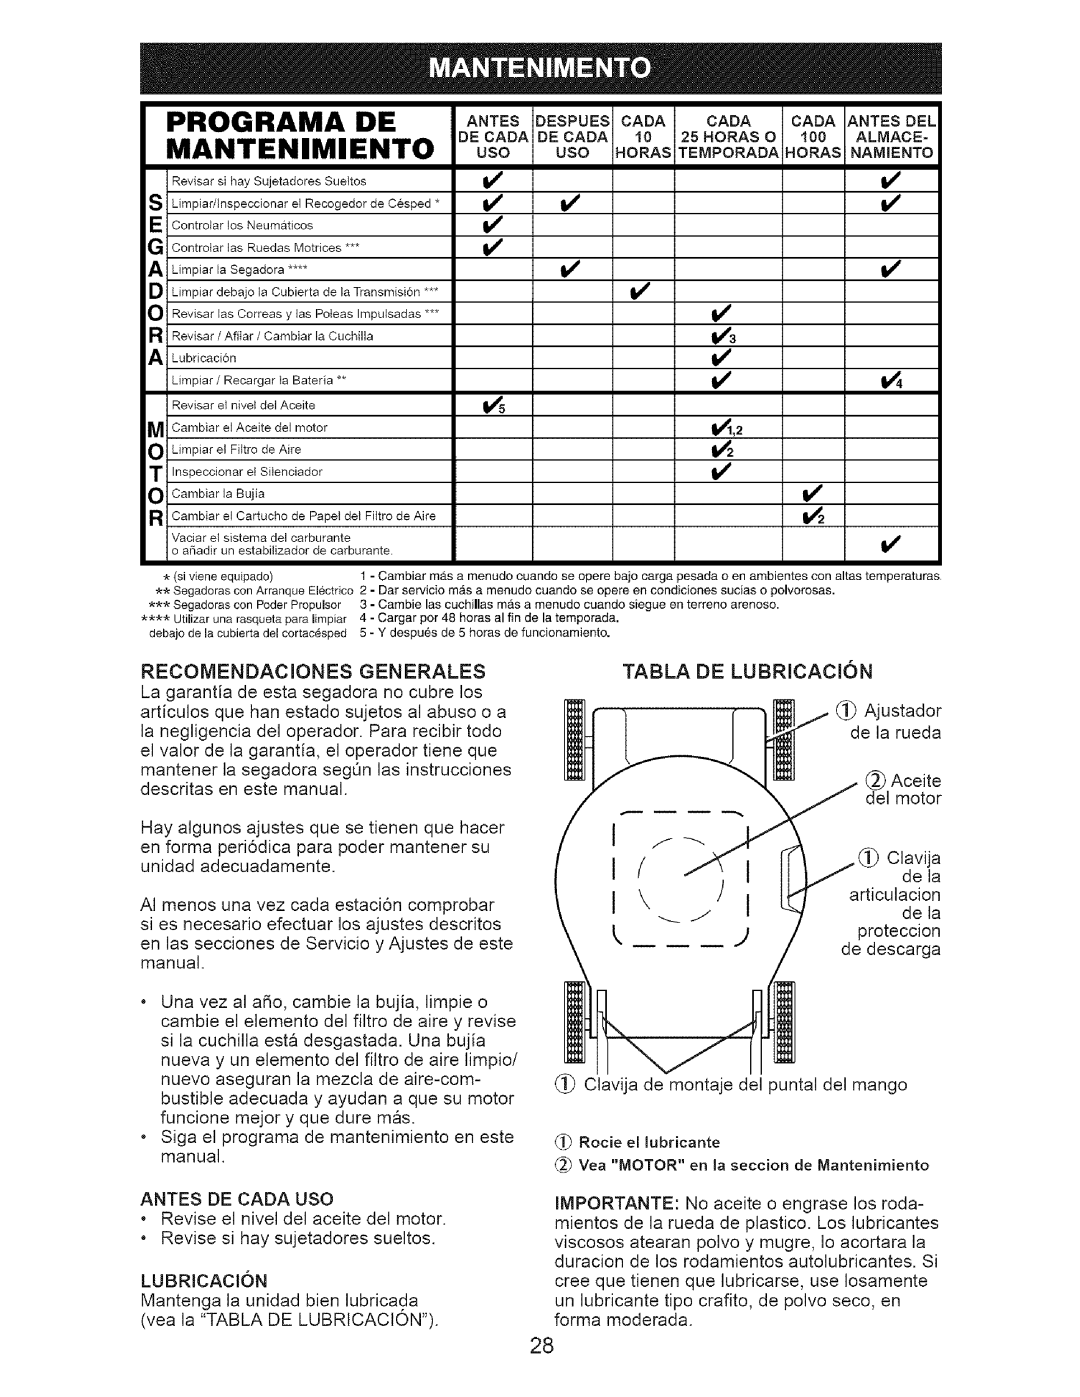 Craftsman 917.375631 owner manual Programa De Mantenimiento, i,,v, v v v3 v v 